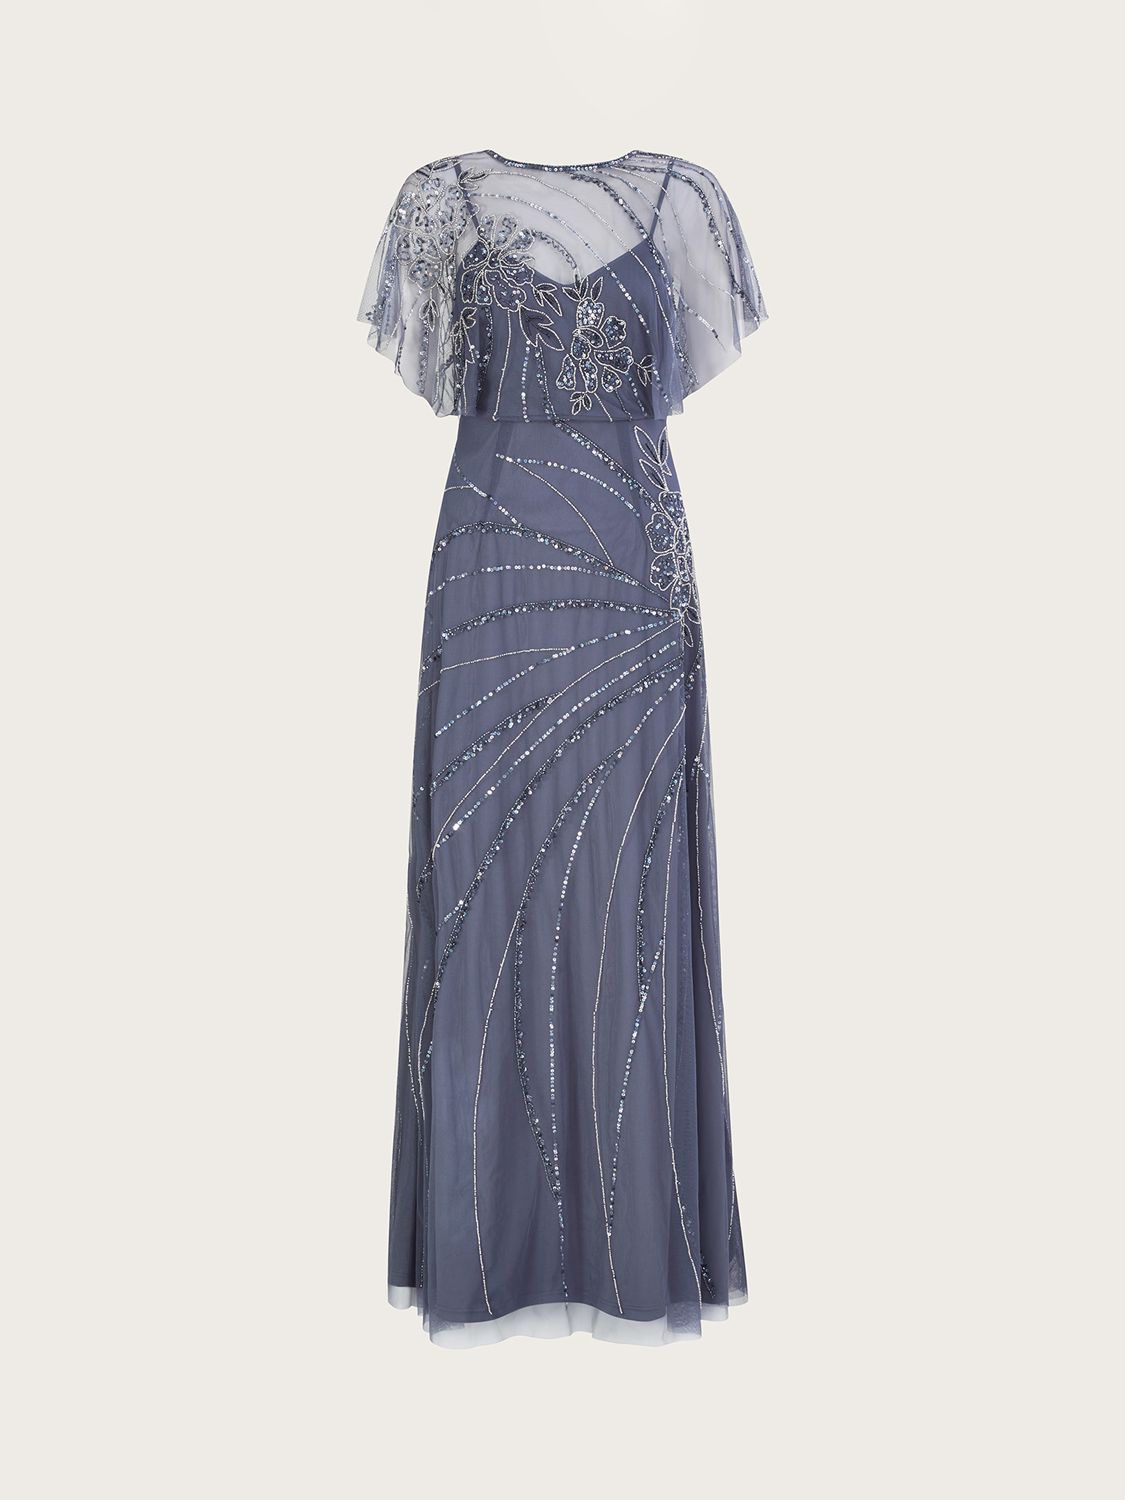 Monsoon Sienna Embellished Maxi Dress, Dark Blue, 6